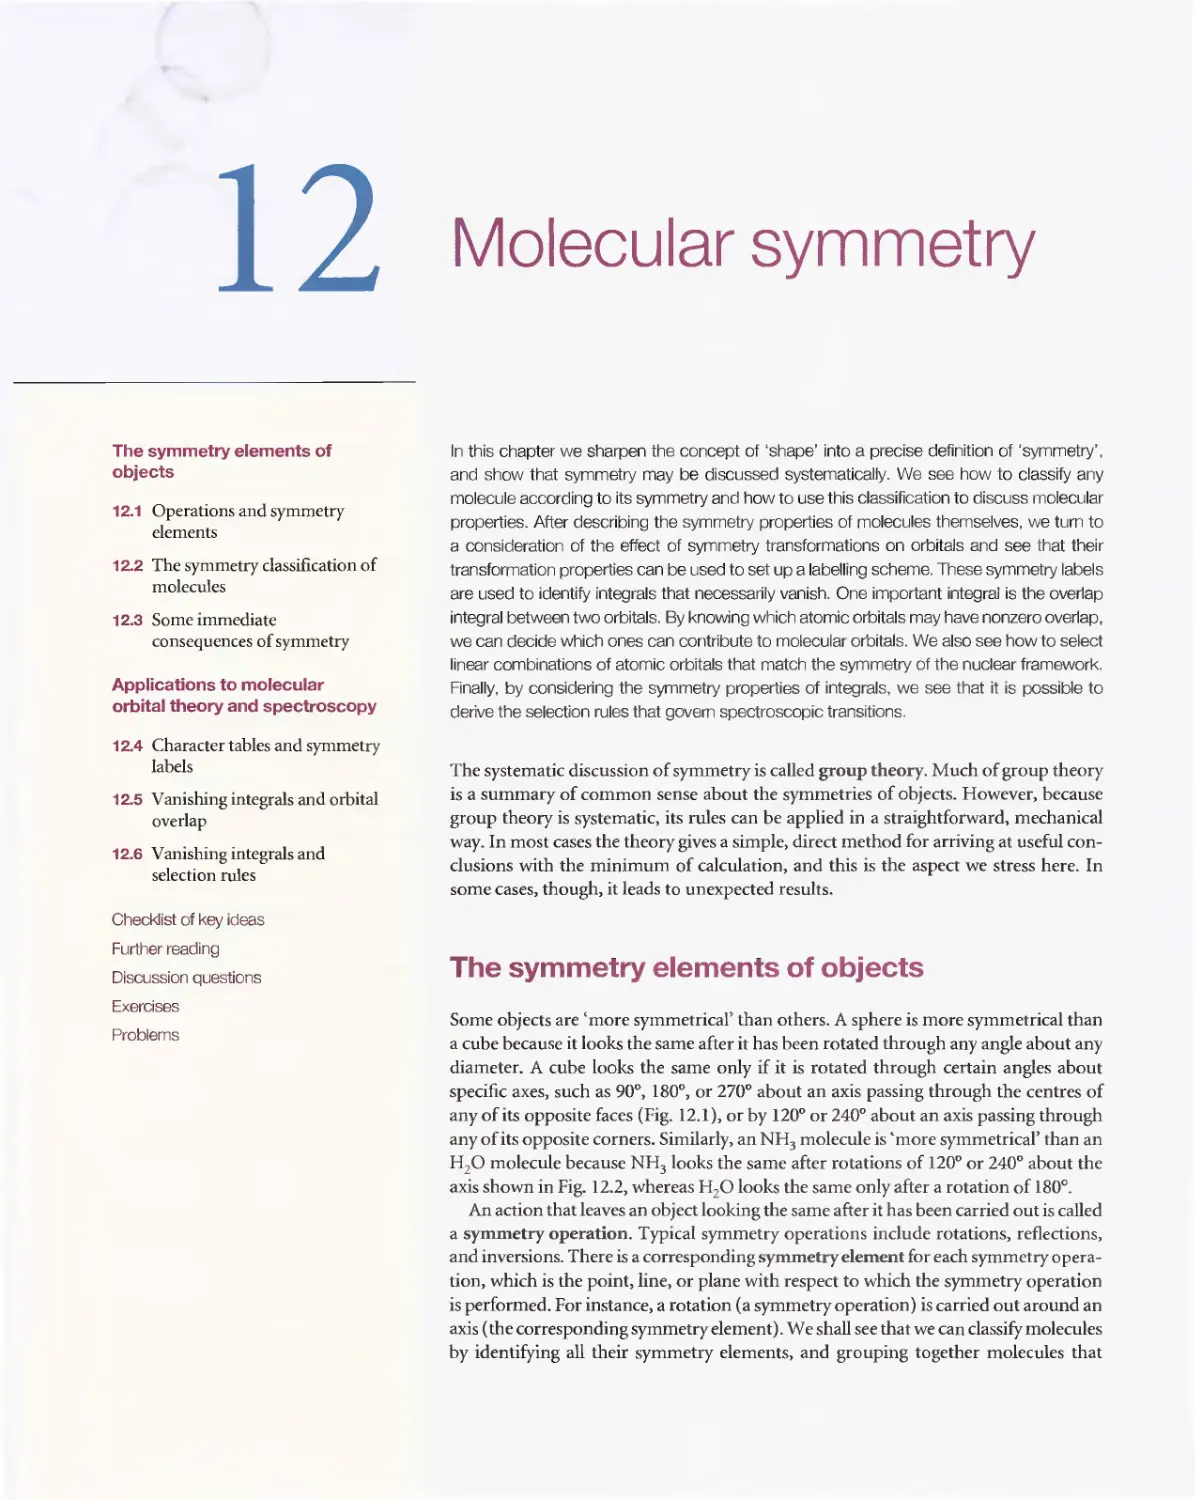 12 - Molecular symmetry